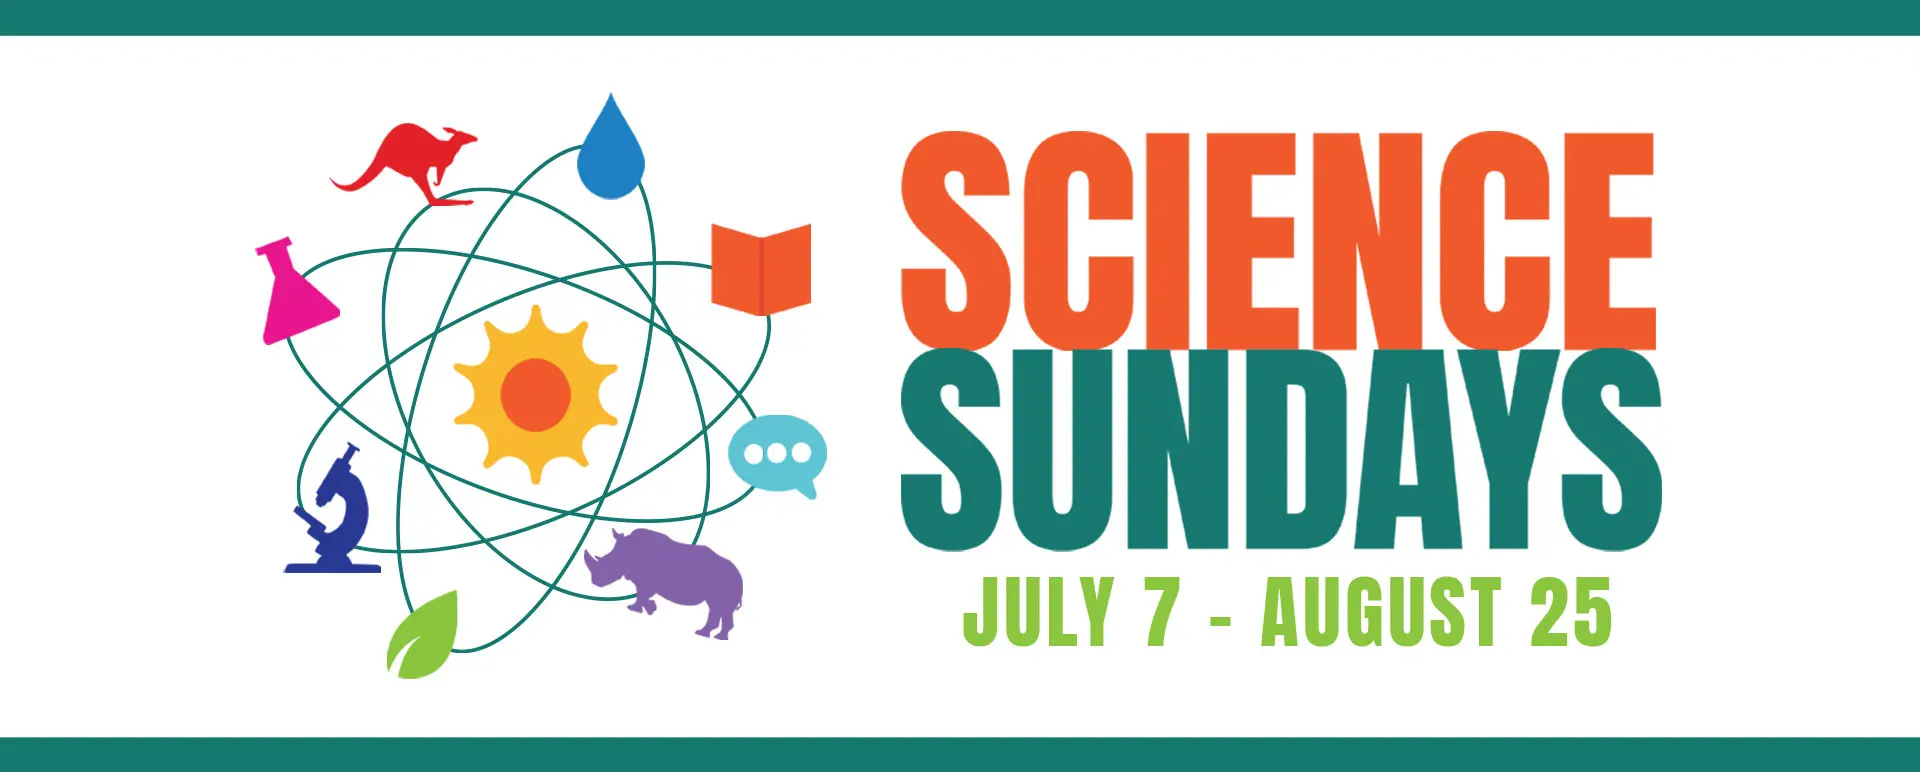 Science Sundays July 7 - August 25